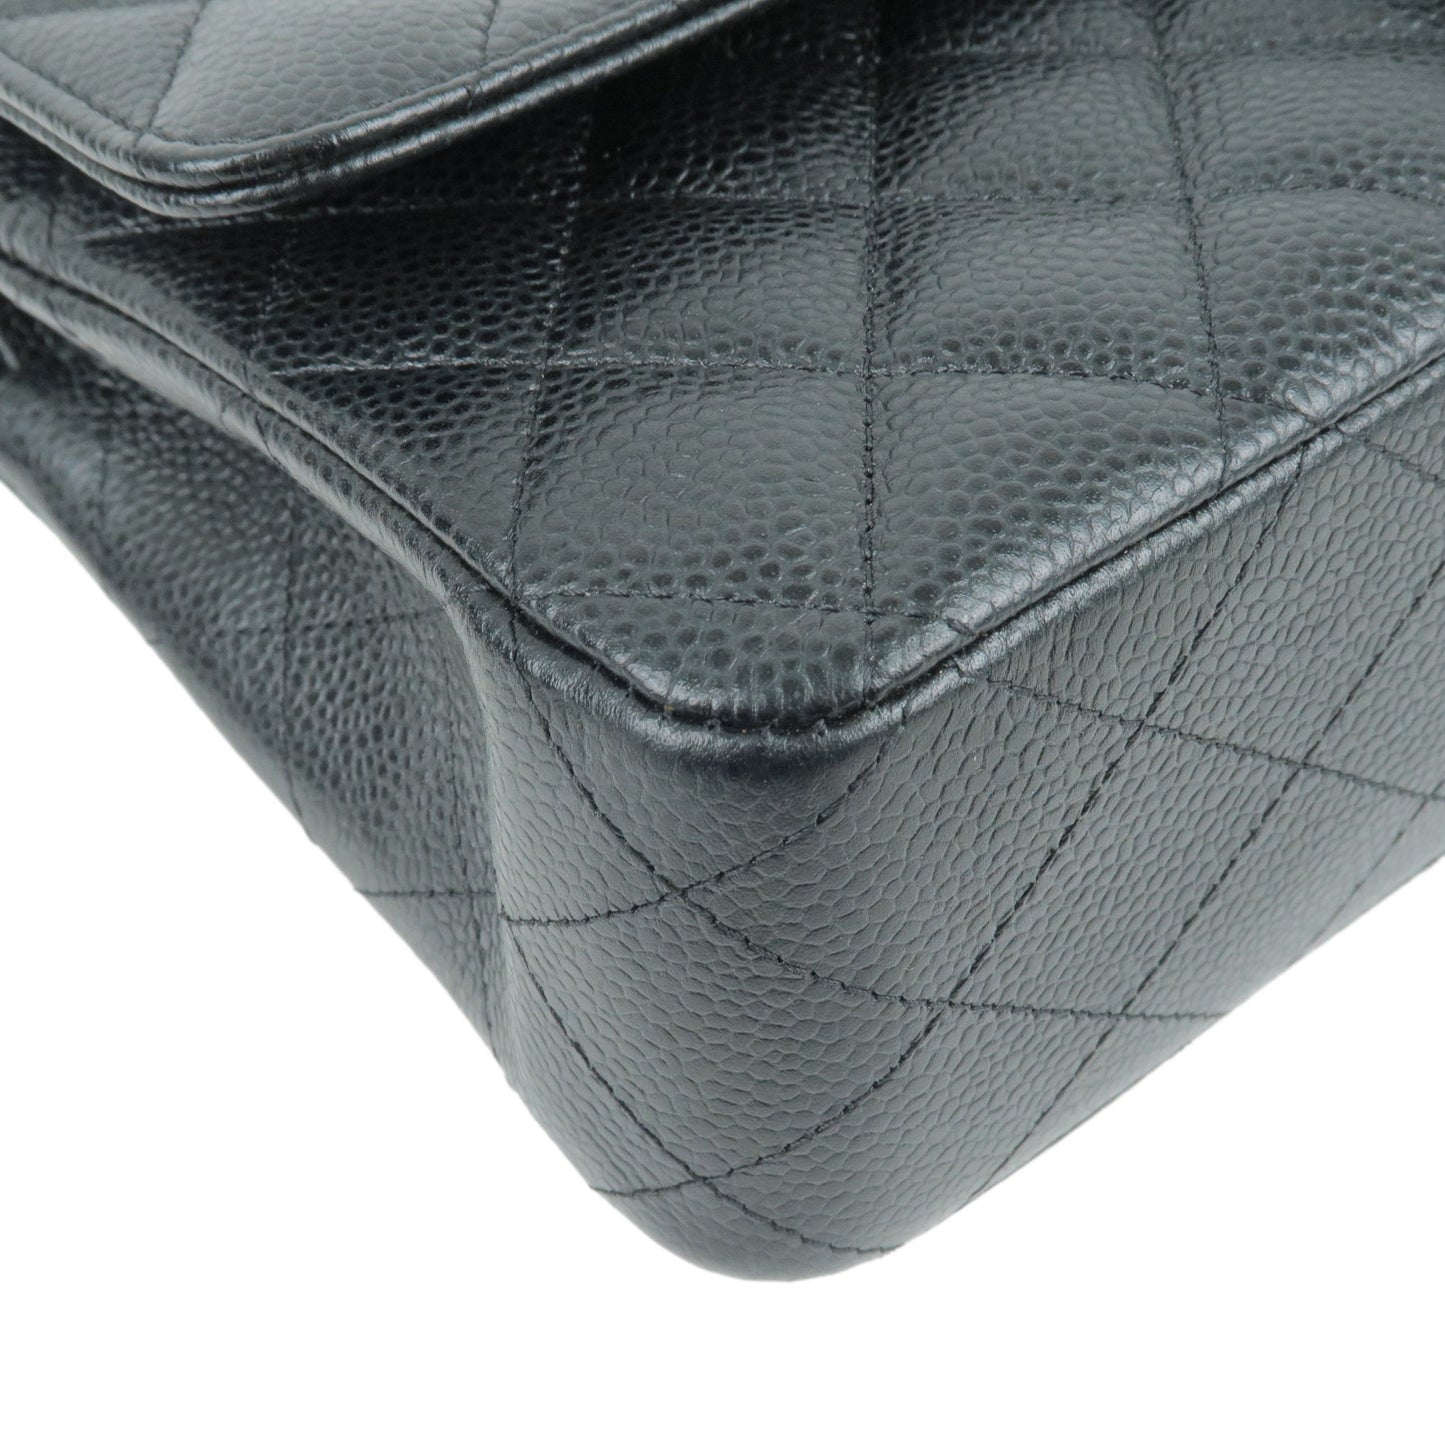 CHANEL Caviar Skin Matelasse 25 Double Flap Shoulder Bag A01112